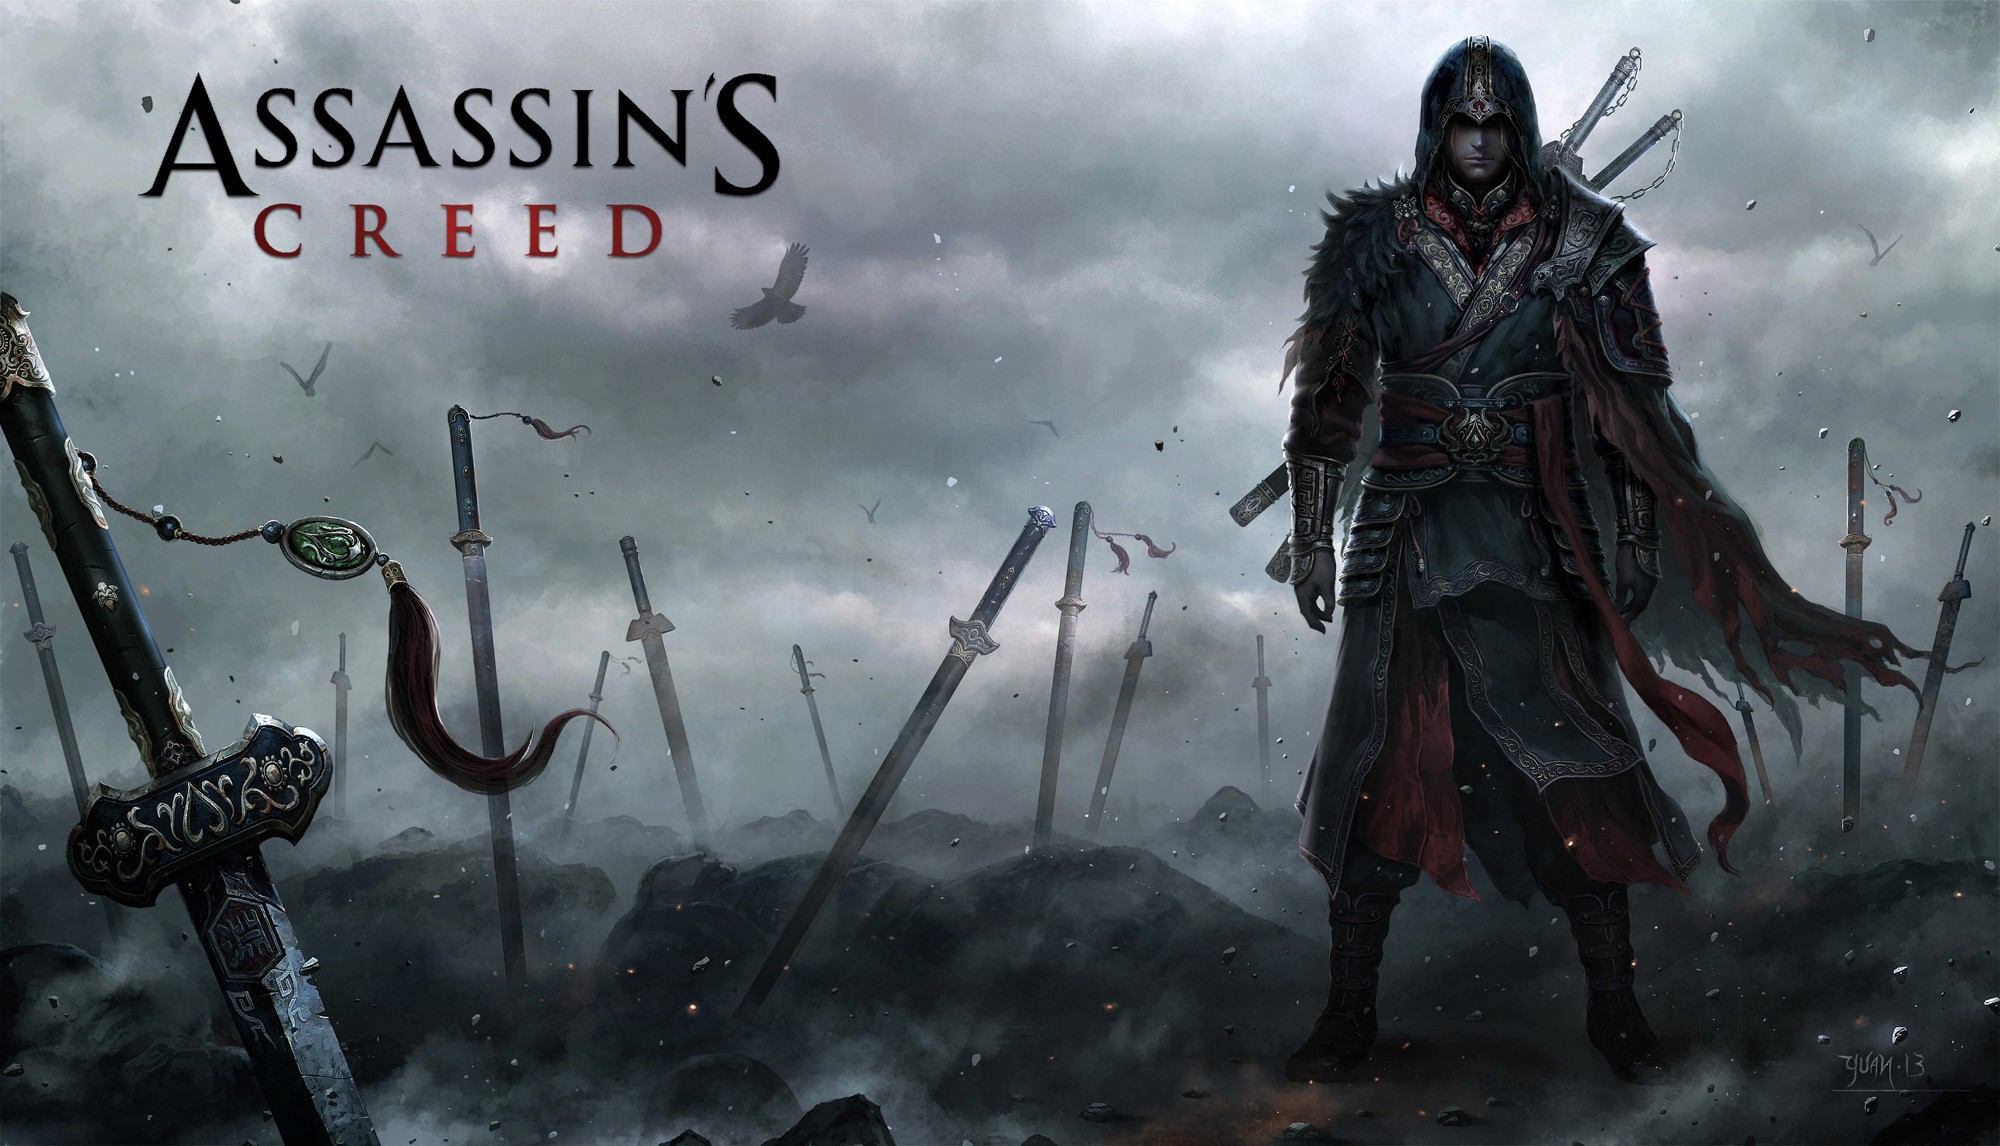 General 2000x1146 Assassin's Creed fantasy art dark fantasy warrior video games video game art PC gaming